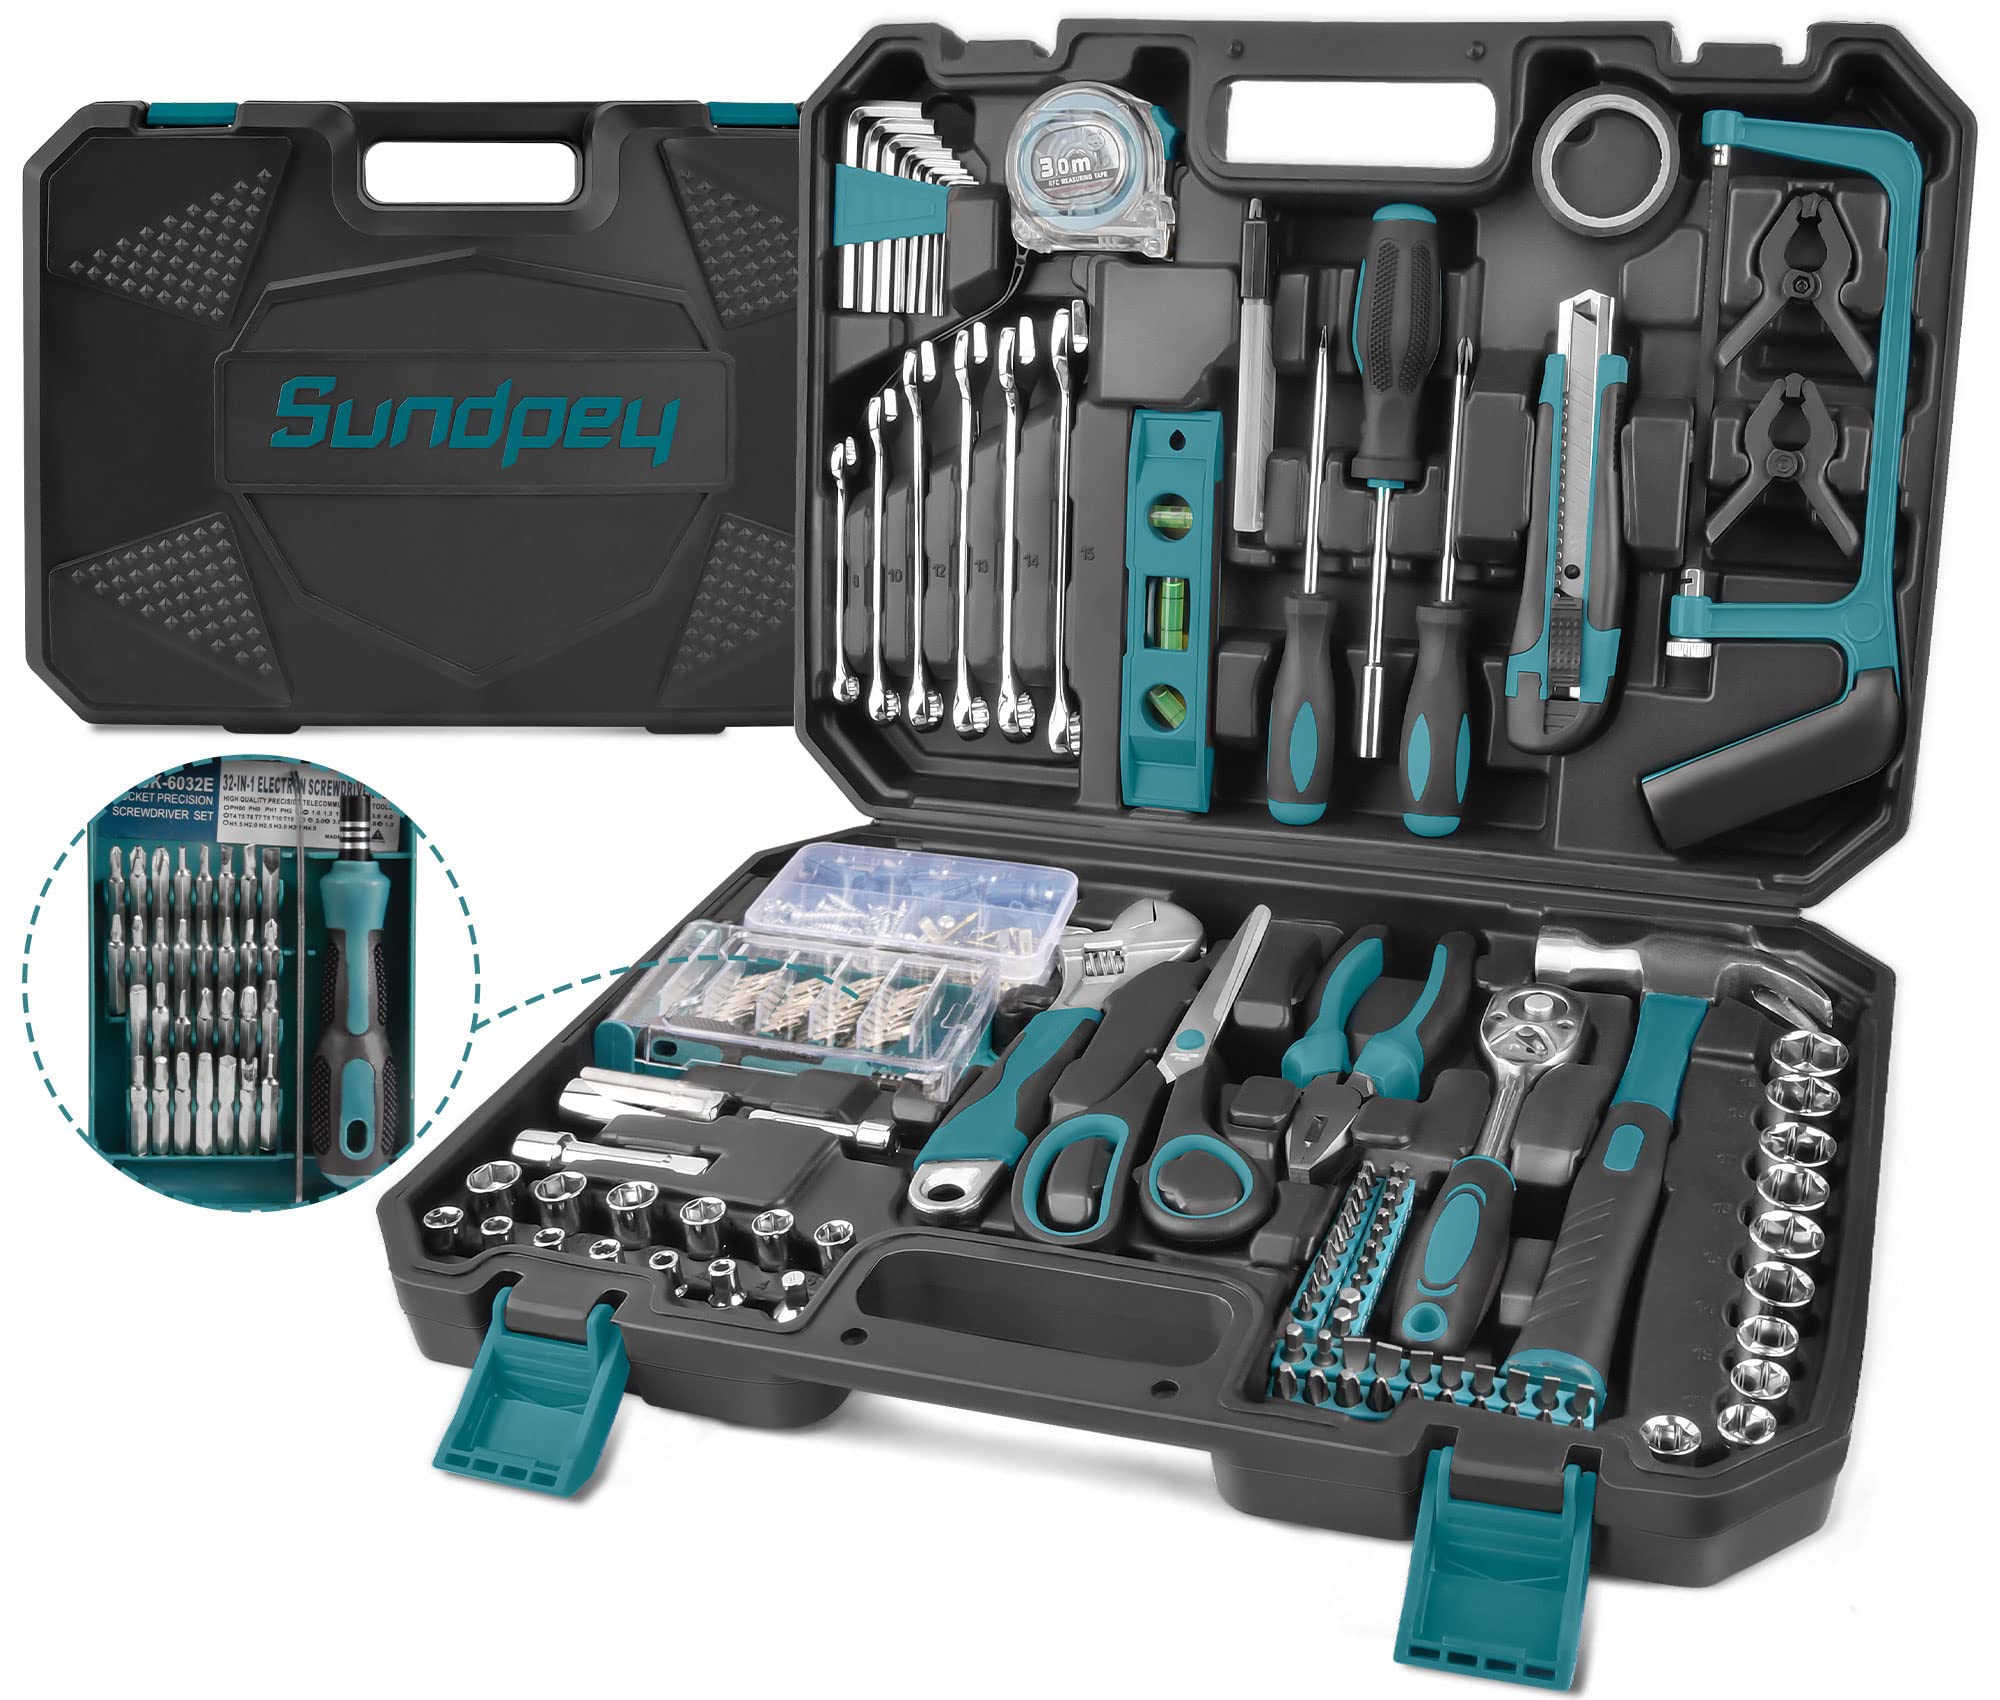 Sundpey Household Tool Kit 257-PCs - Home Auto Repair Tool Set Complete General Hand Tool Set - Tool Kits for Handyman & Precision Screwdriver Set & Metric Hex Key & Toolbox Storage Case for Men Women